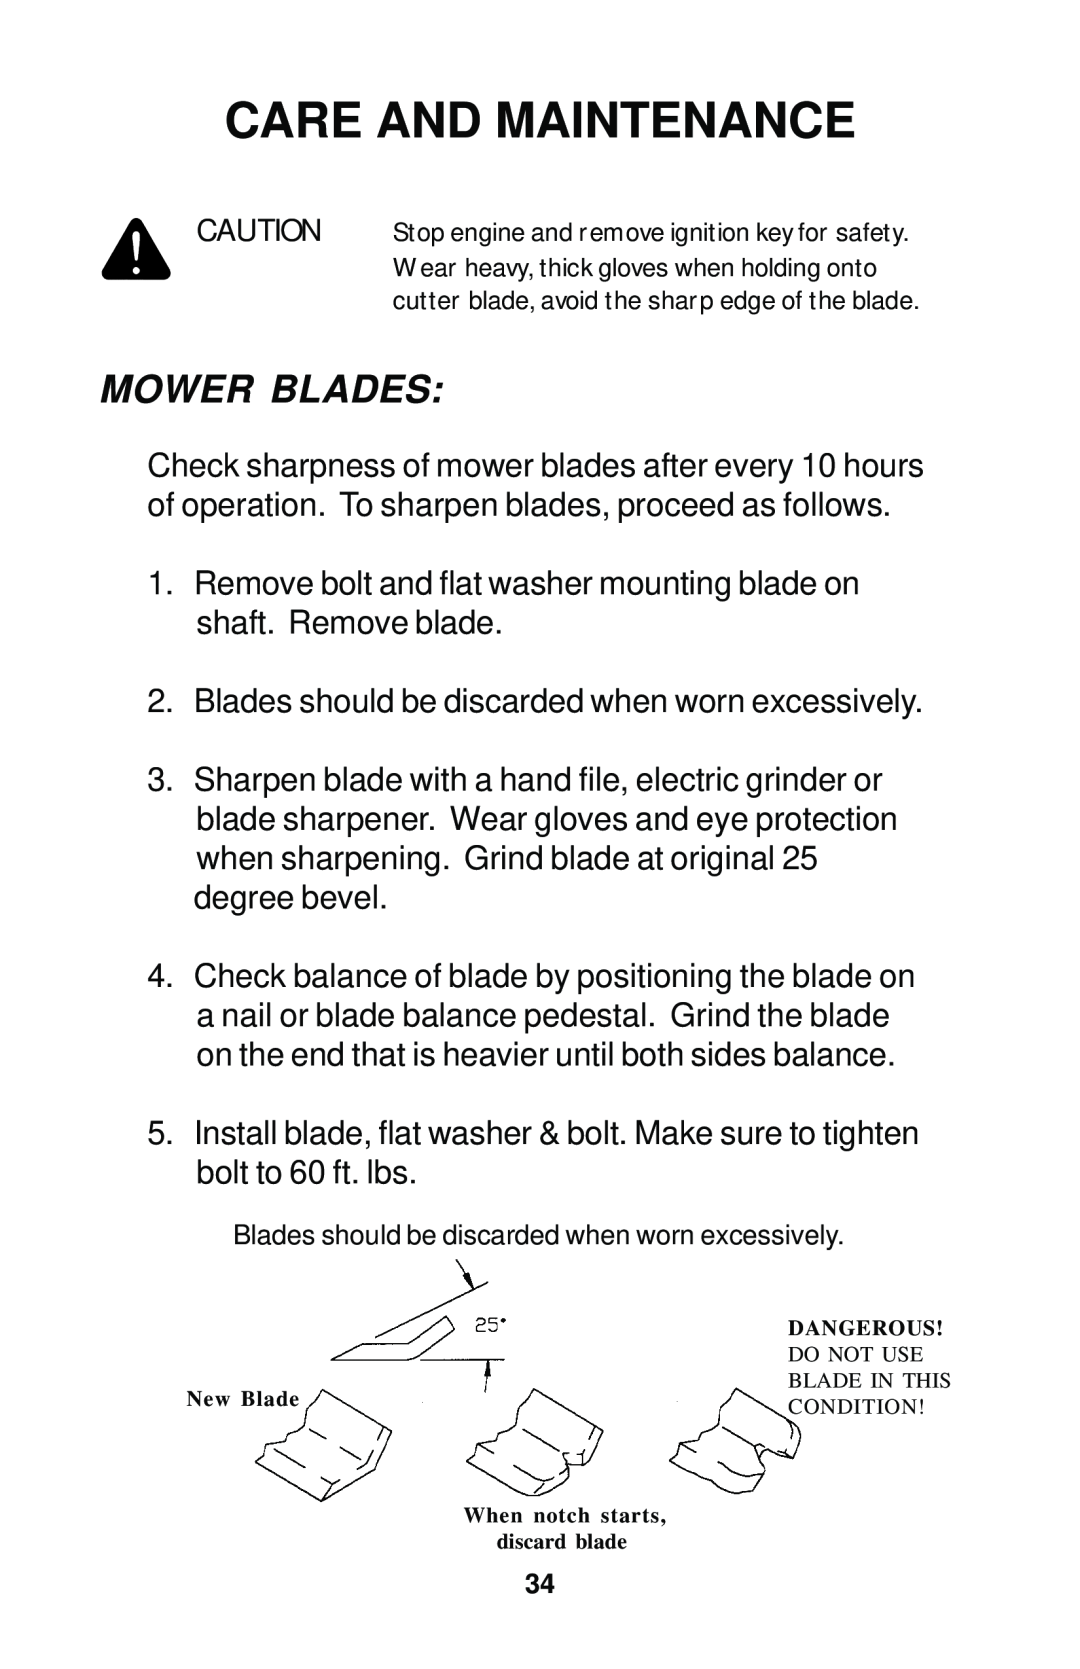 Dixon 12881-1104 manual Mower Blades, Care And Maintenance 